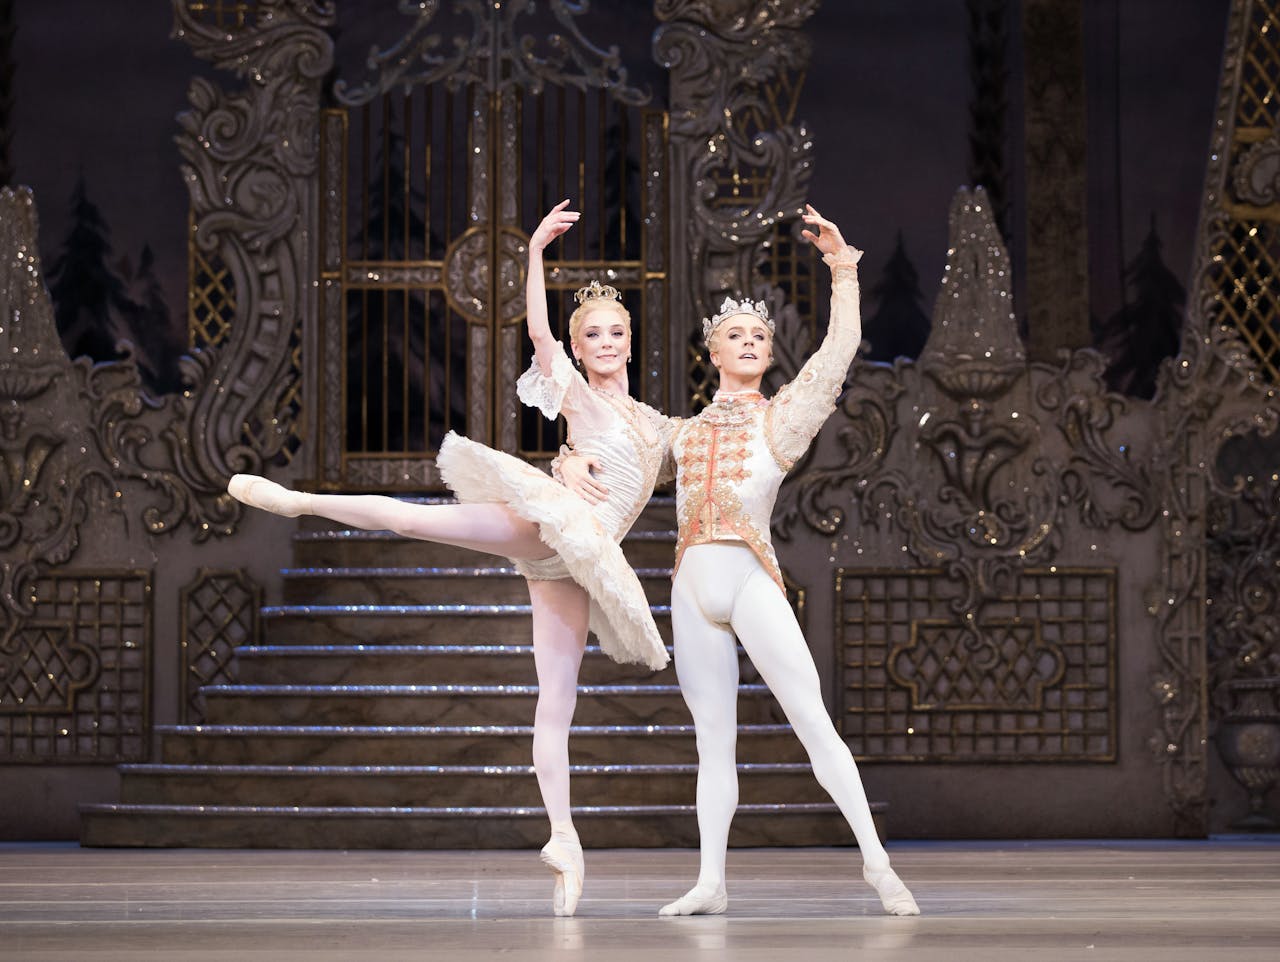 Steven McRae as The Prince and Sarah Lamb as The Sugar Plum Fairy in The Nutcracker, The Royal Ballet © 2017 ROH. Photographed by Karolina Kuras